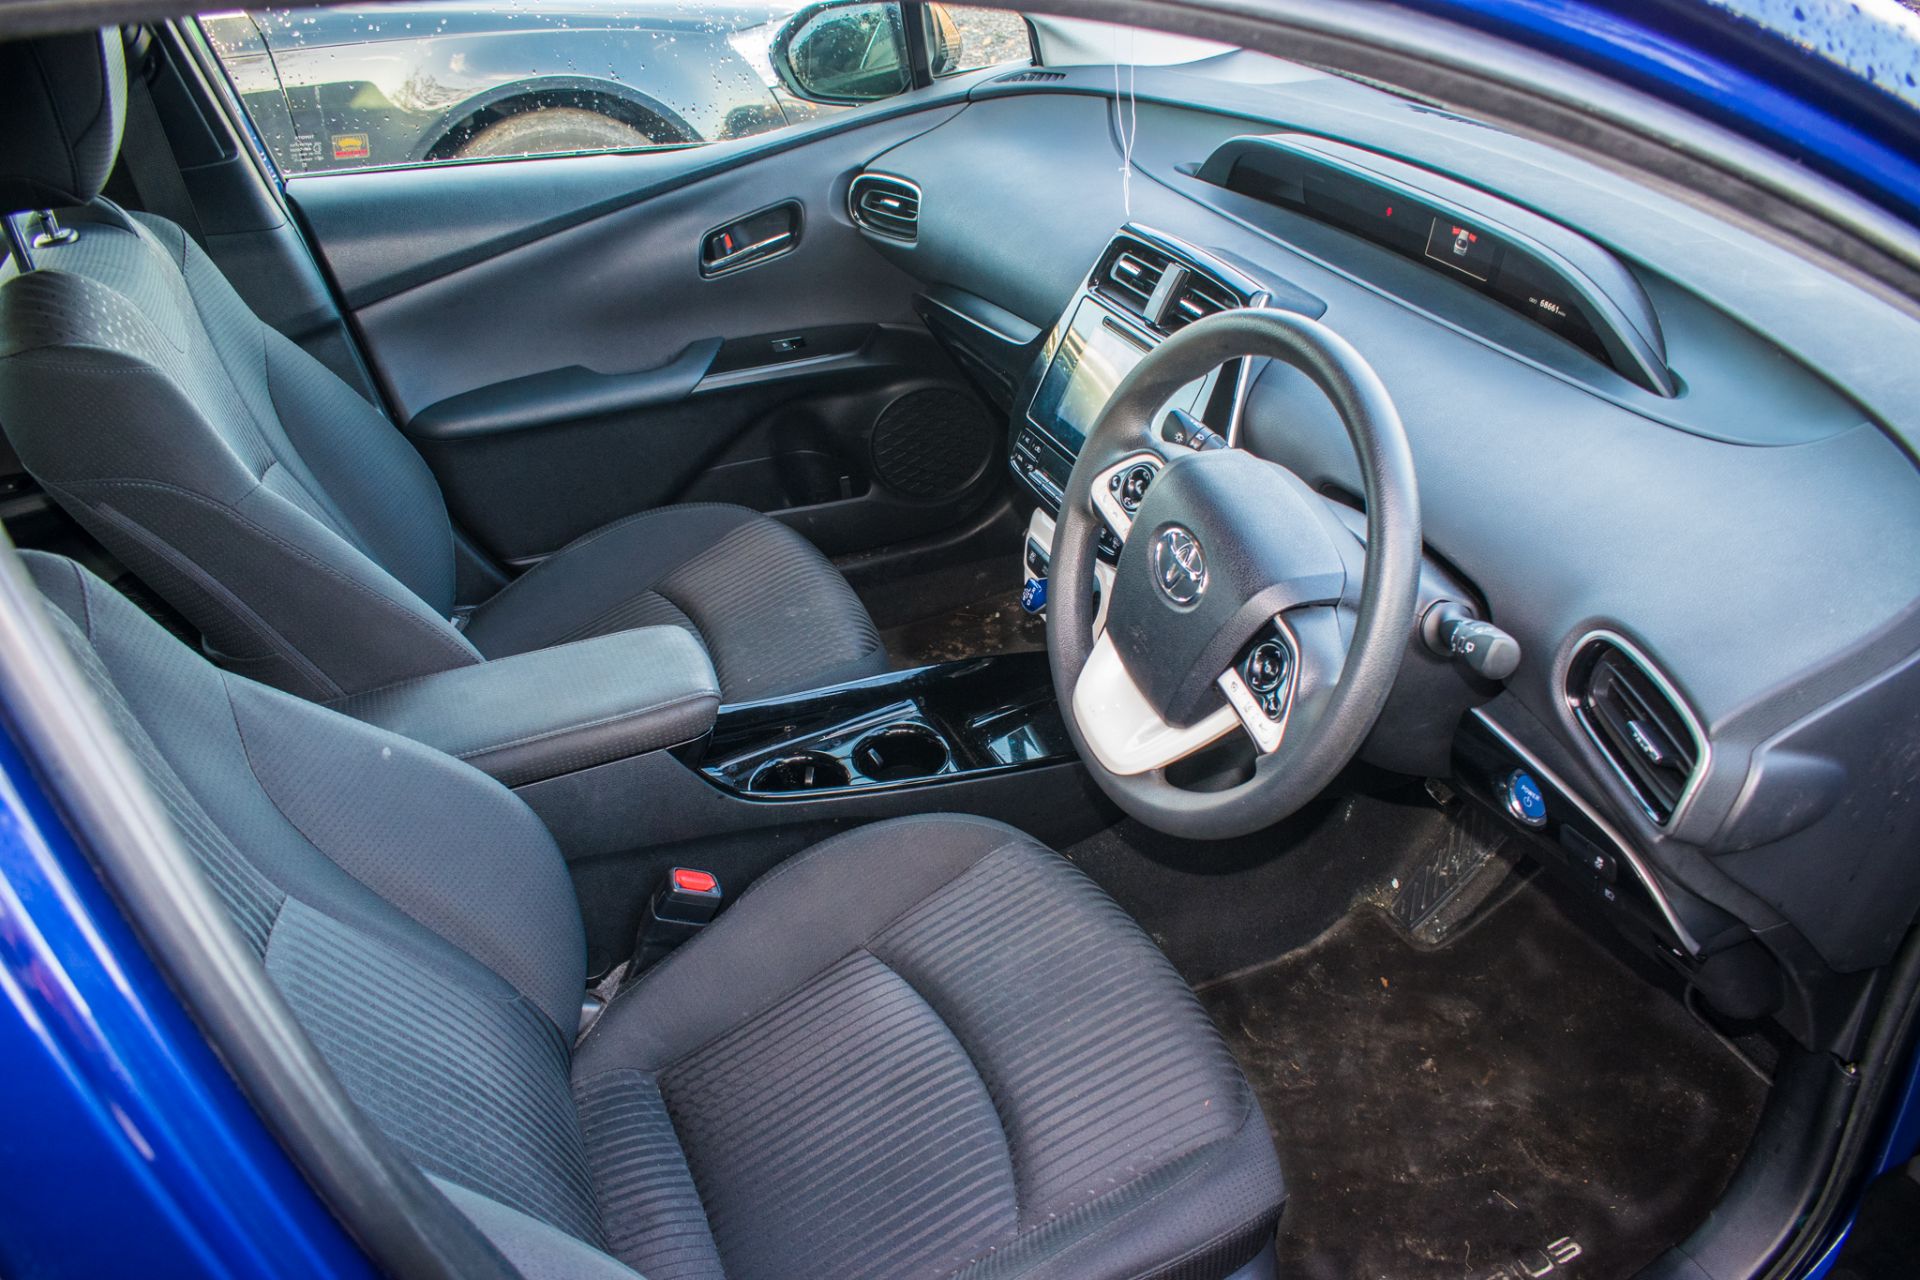 Toyota Prius Active Hybrid Electric 5 door Hatchback   Registration Number: LM67 OKH Date of First - Image 13 of 17